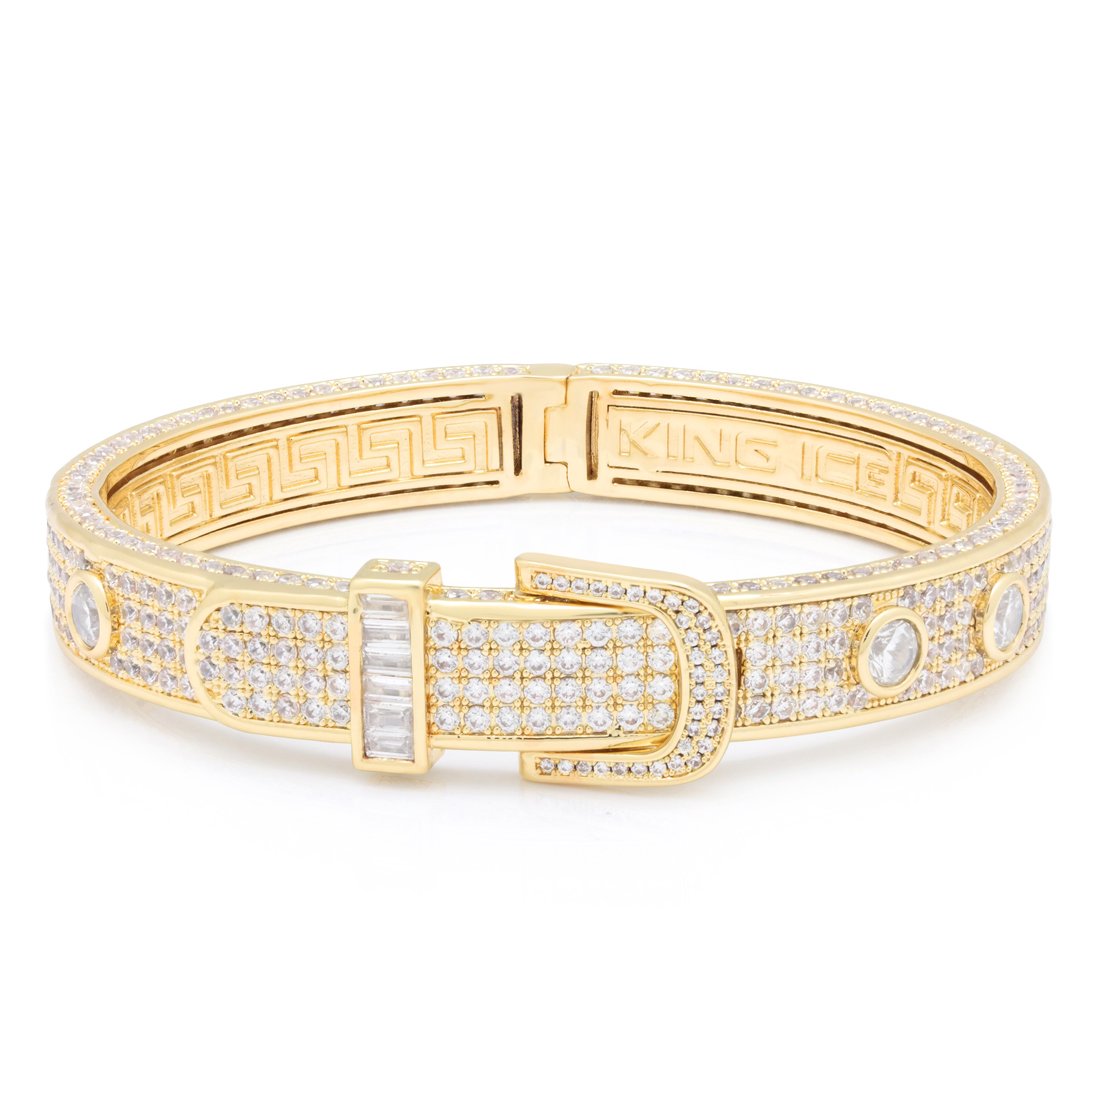 Buy Gold Bracelet Online - Gold Jewellery Collections| Jos Alukkas Online |  Buy Gold Ivy Bracelet Online - Beautiful Gold Chain| Jos Alukkas Online